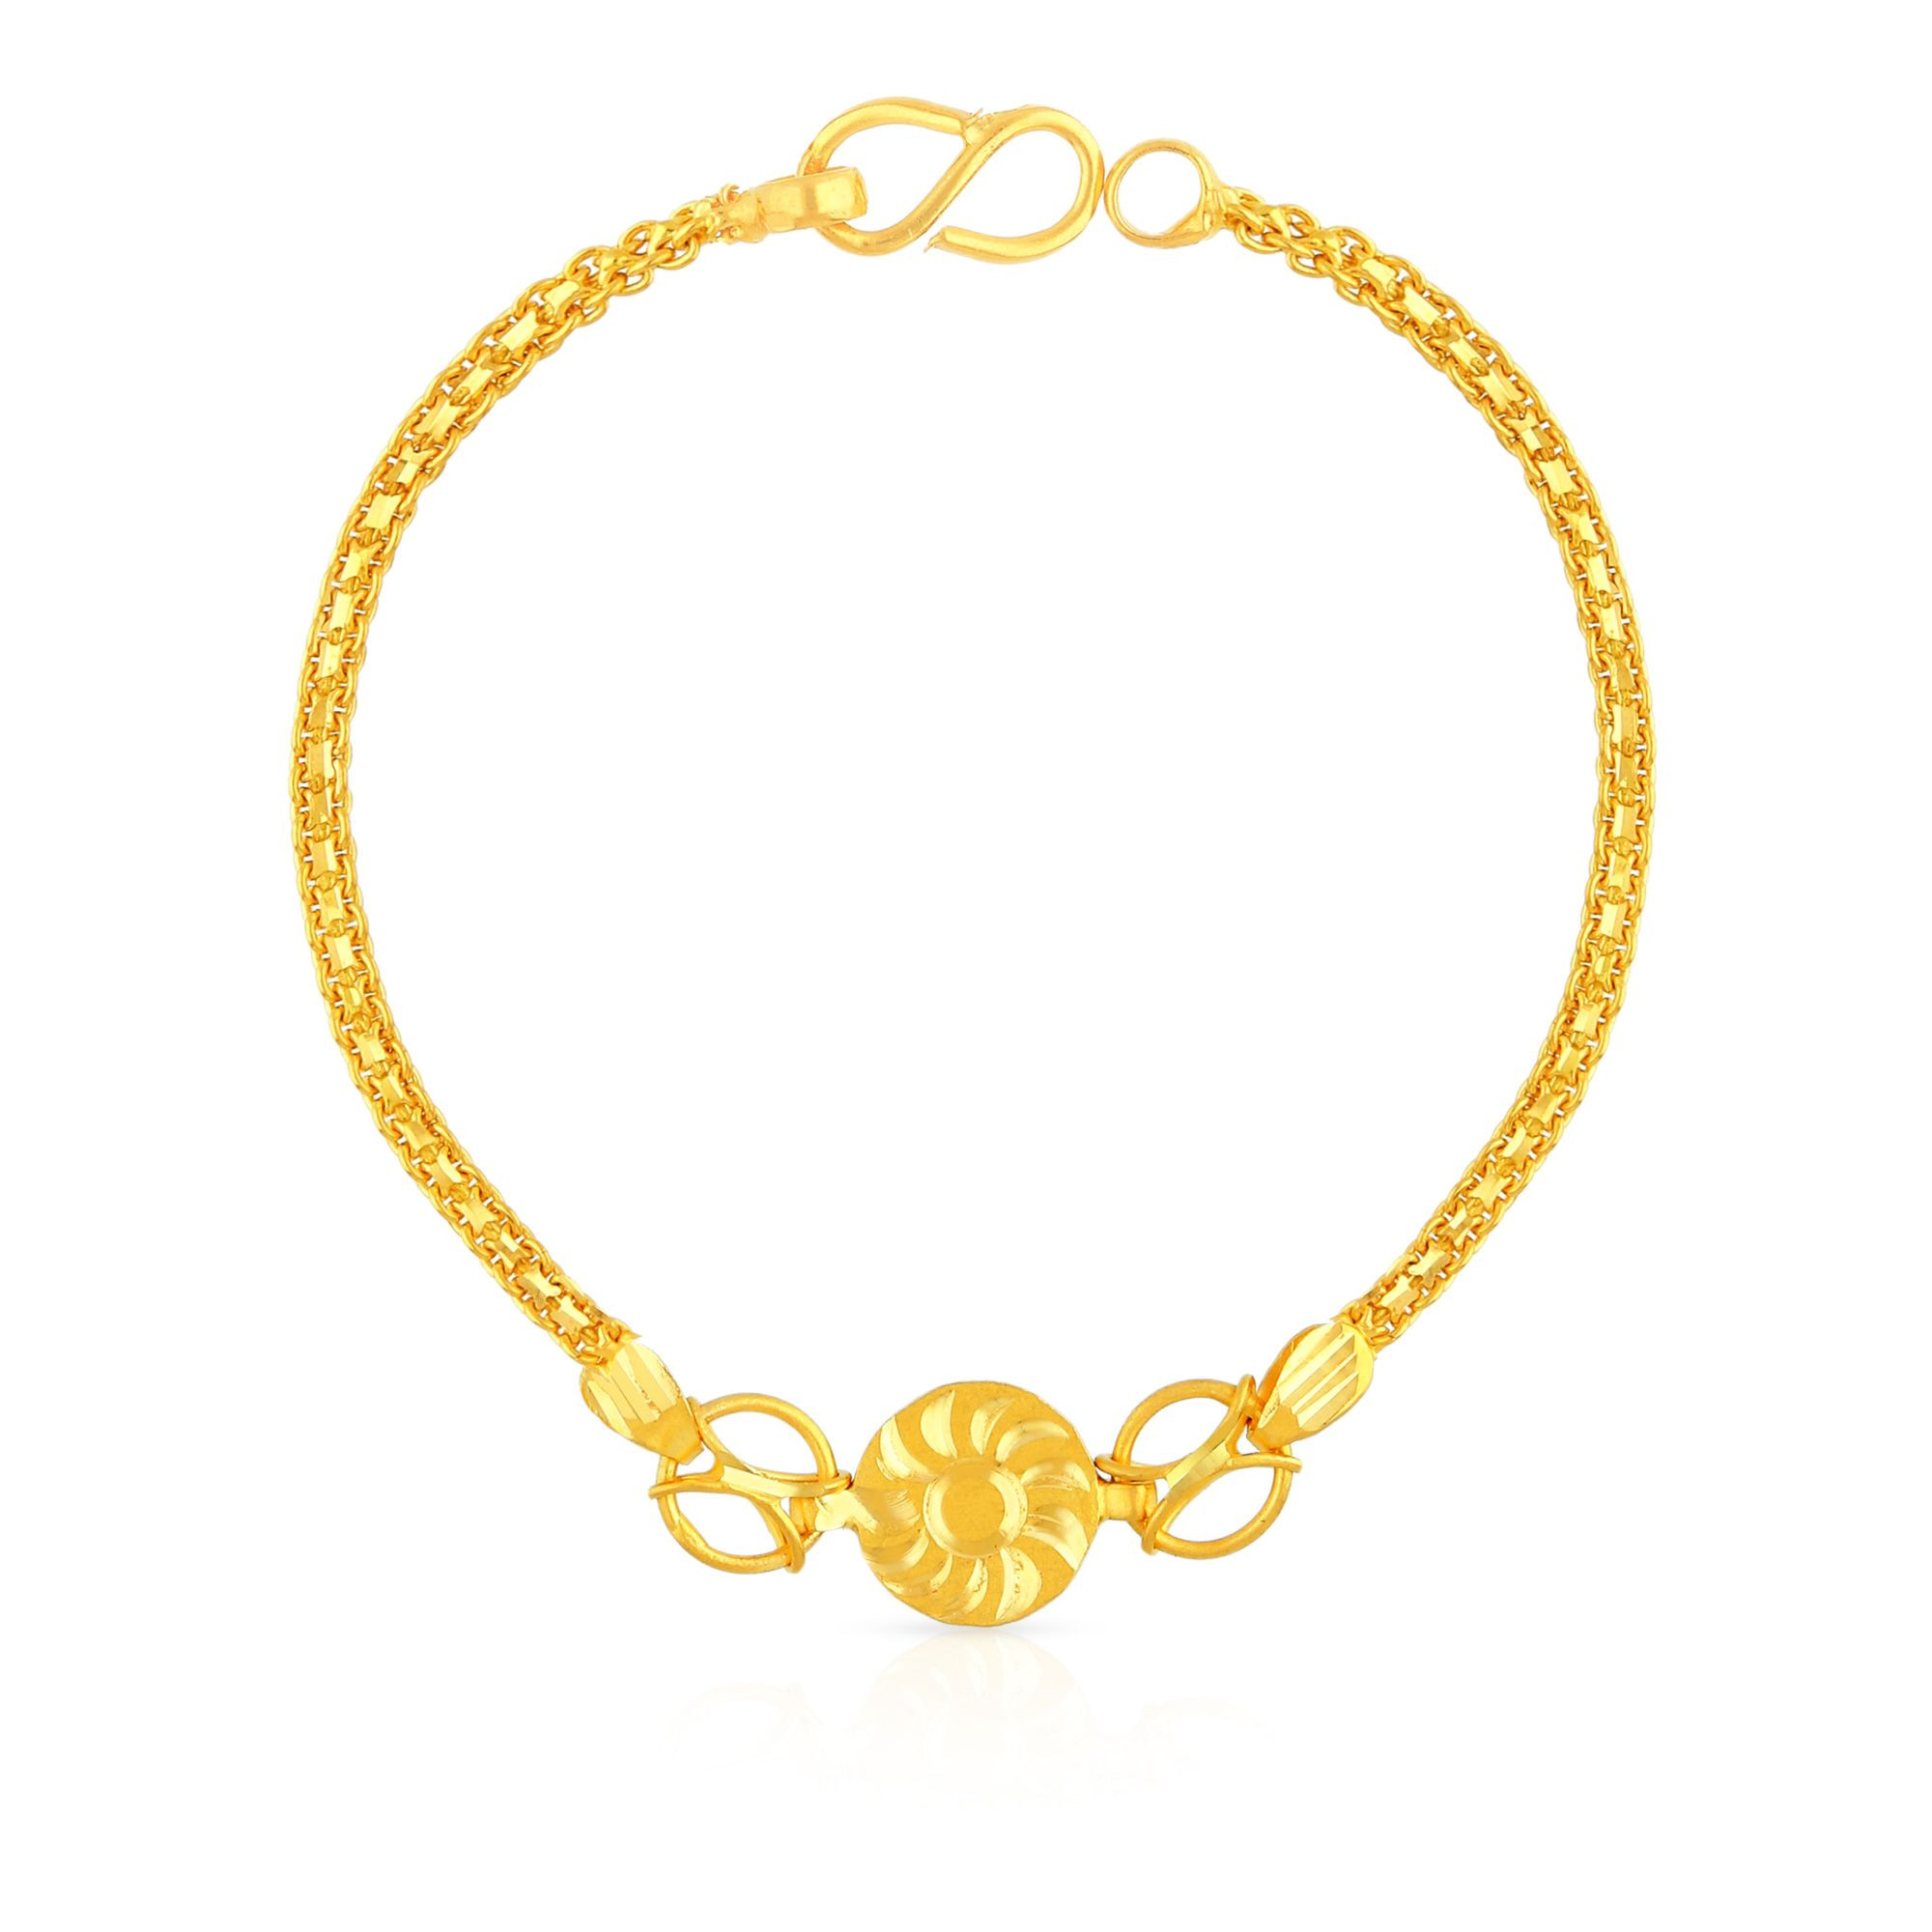 Buy Malabar Gold and Diamonds 22kt 916 Yellow Gold Bangle for Women BIS  Hallmarked at Amazonin